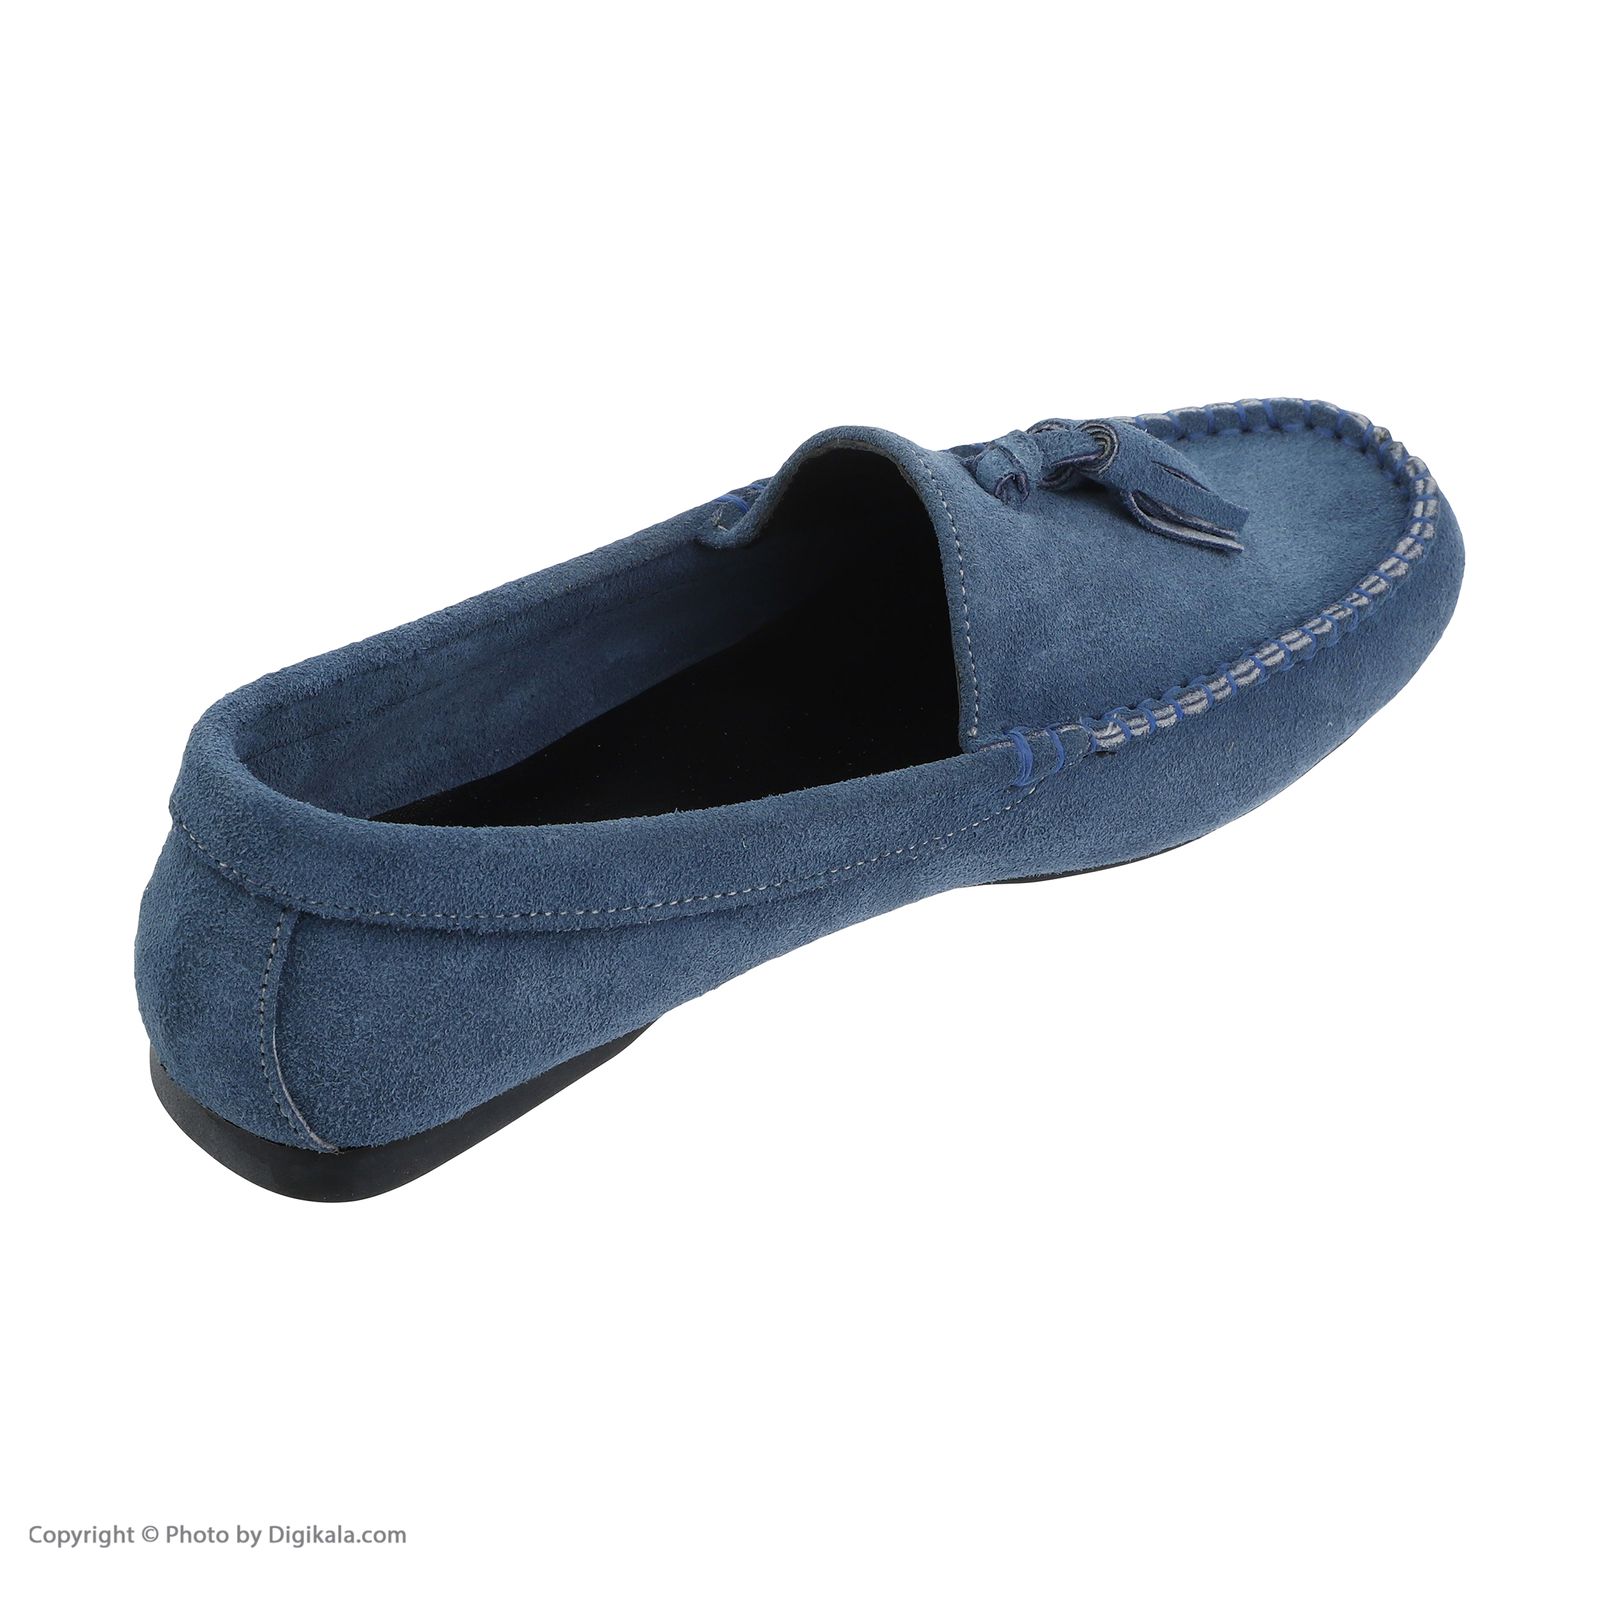  کفش کالج زنانه شوپا مدل skb1000sky blue -  - 5